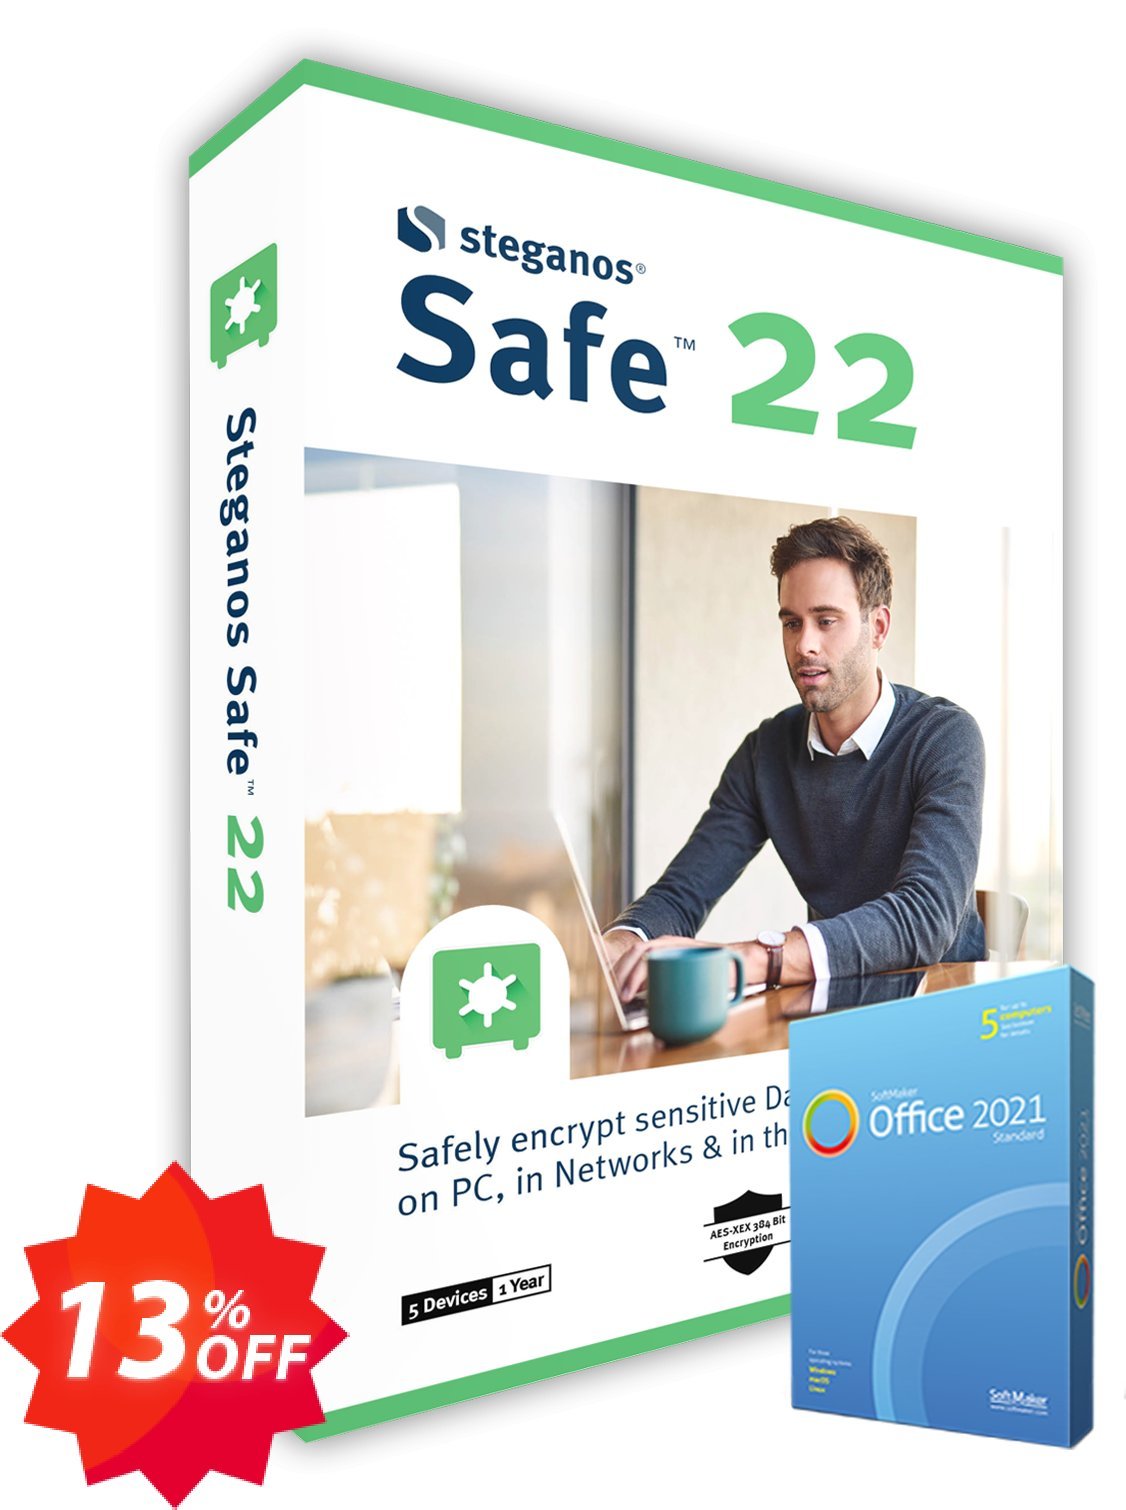 Steganos Safe 22 Coupon code 13% discount 